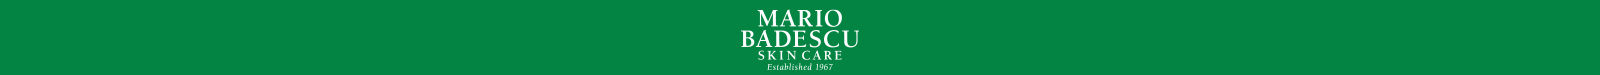 Mario Badescu, Skin Care